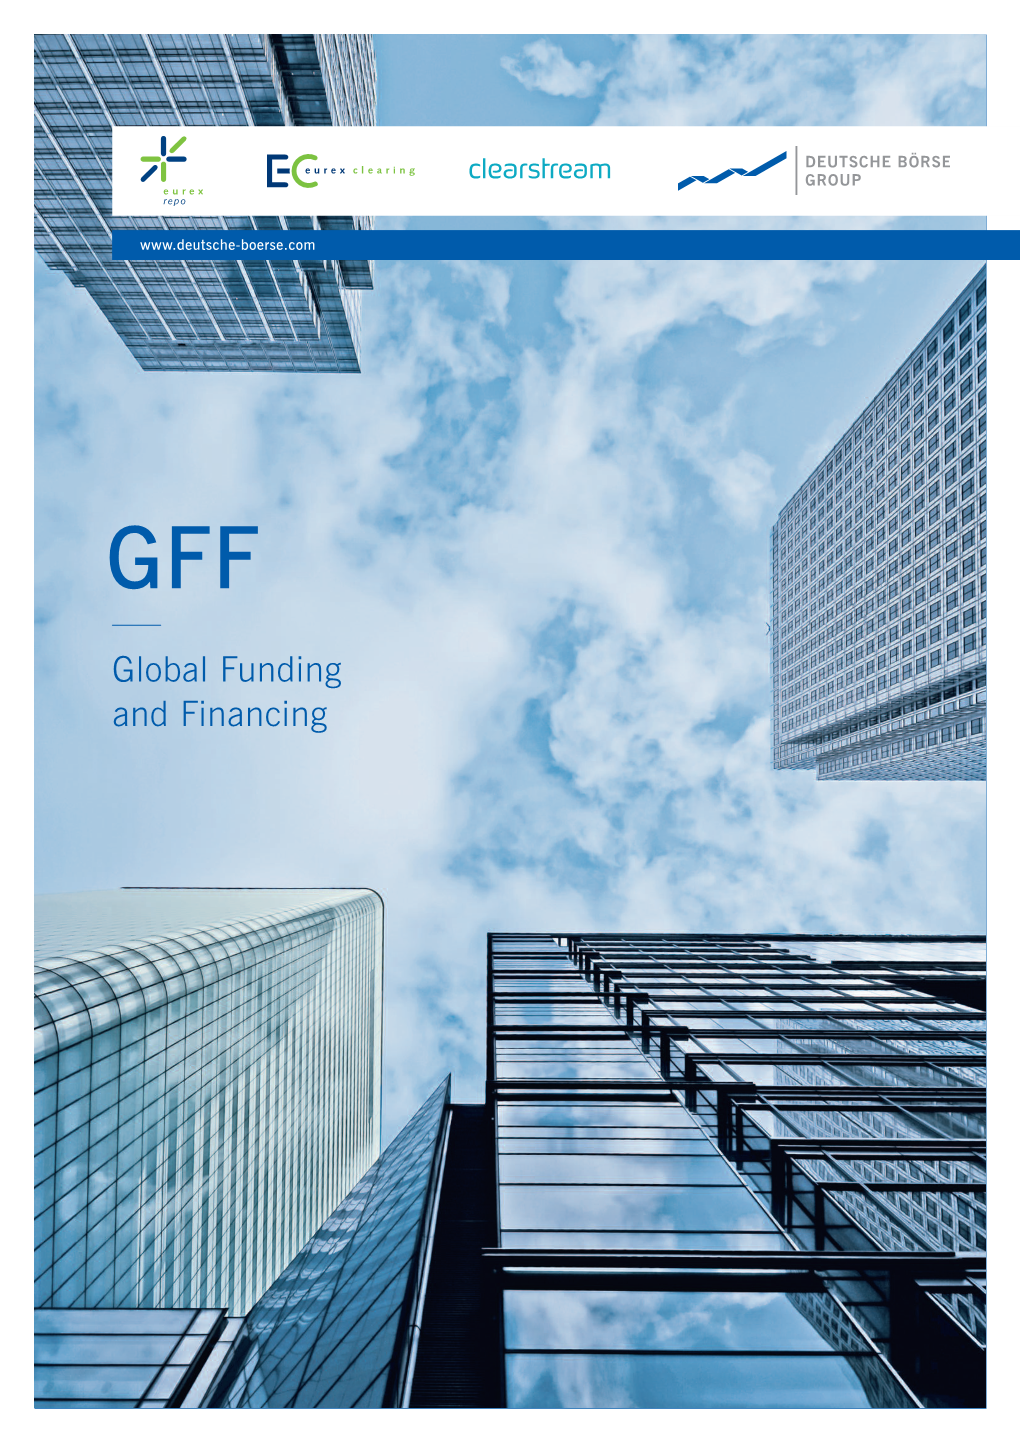 Global Funding and Financing 2 GFF Global Funding and Financing GFF